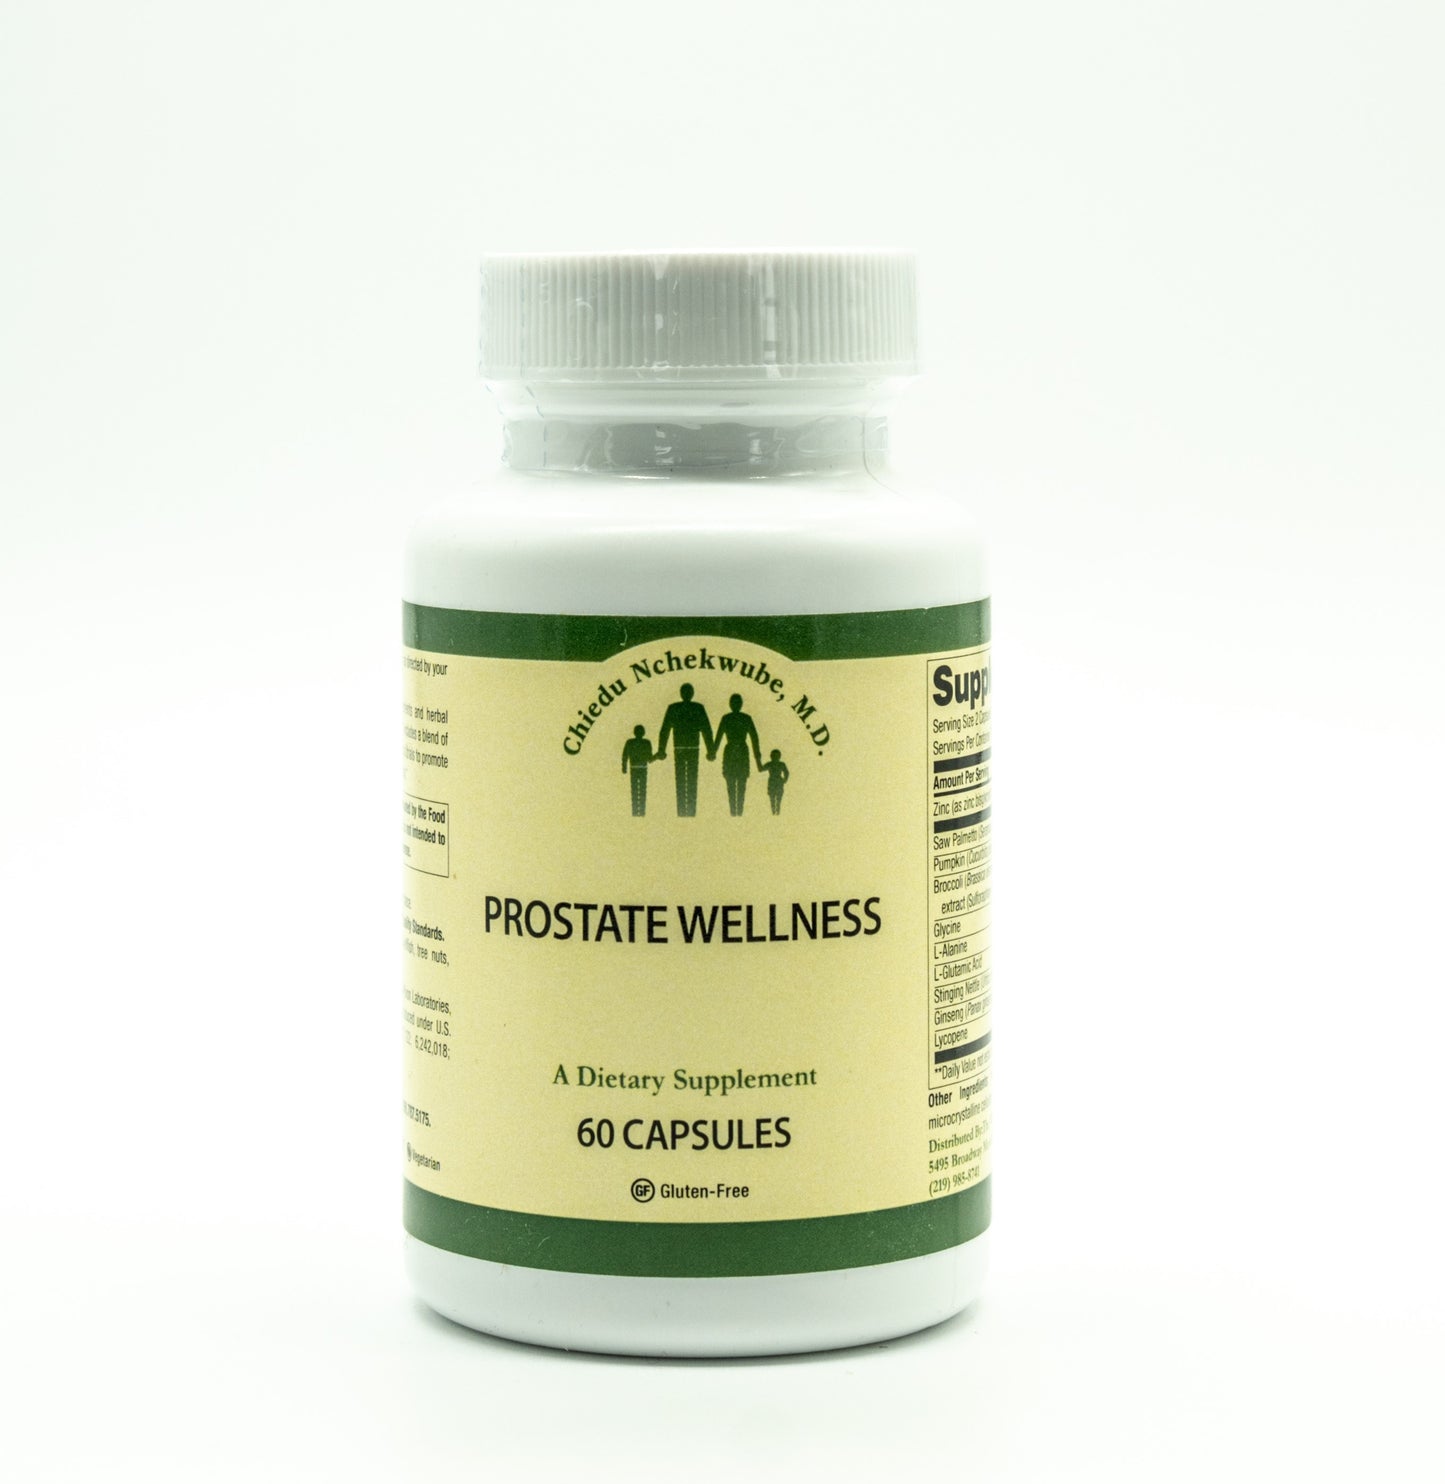 Prostate Wellness